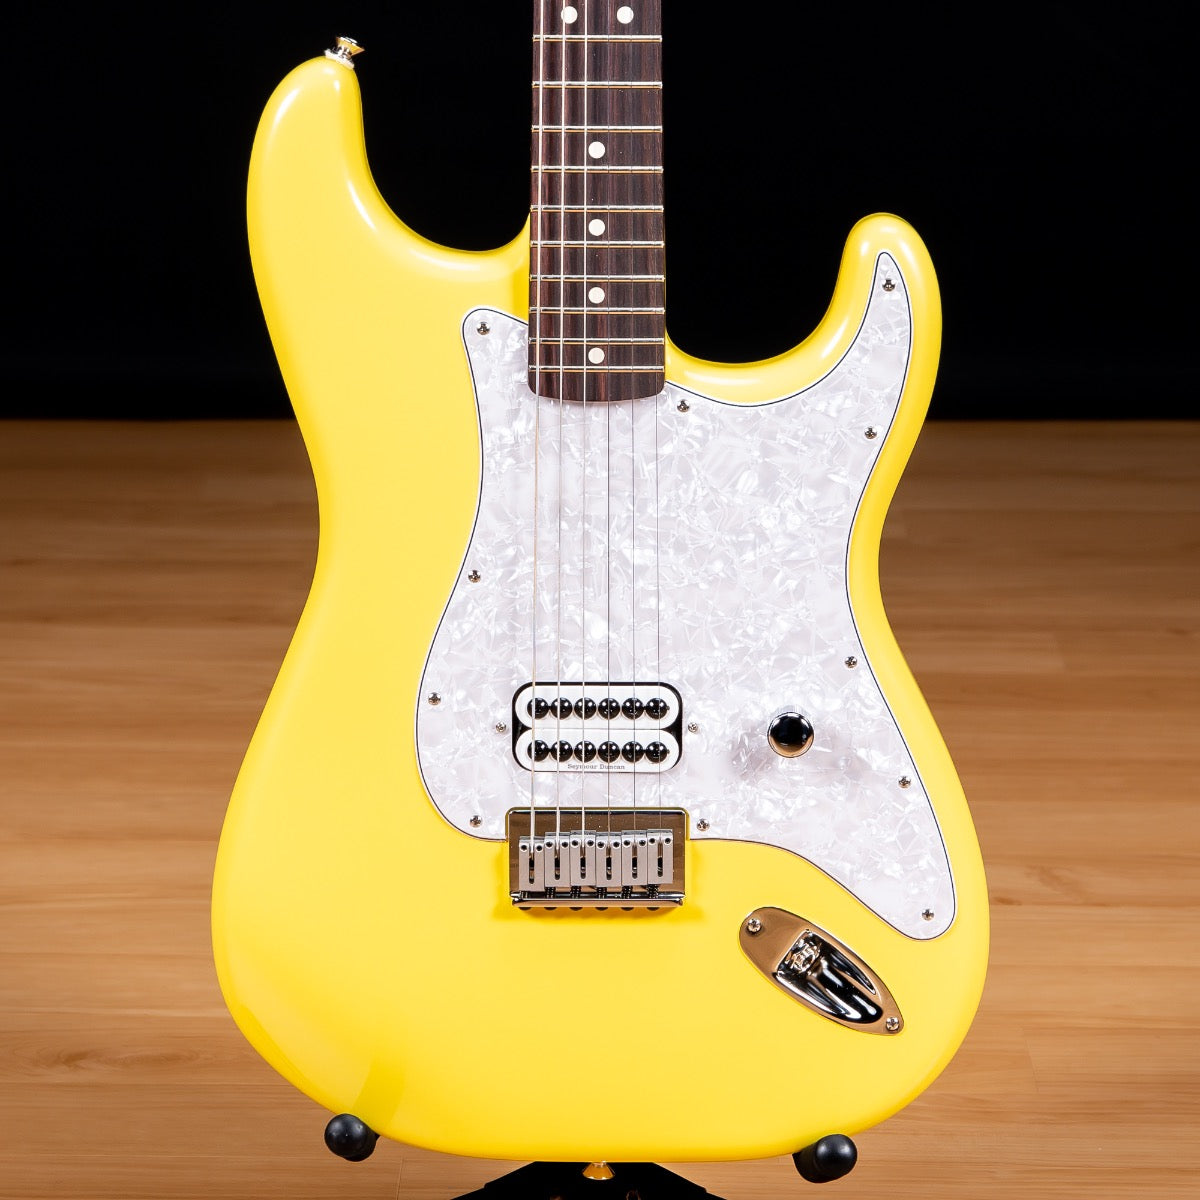 Fender Limited Edition Tom Delonge Stratocaster - Graffiti Yellow, View 1